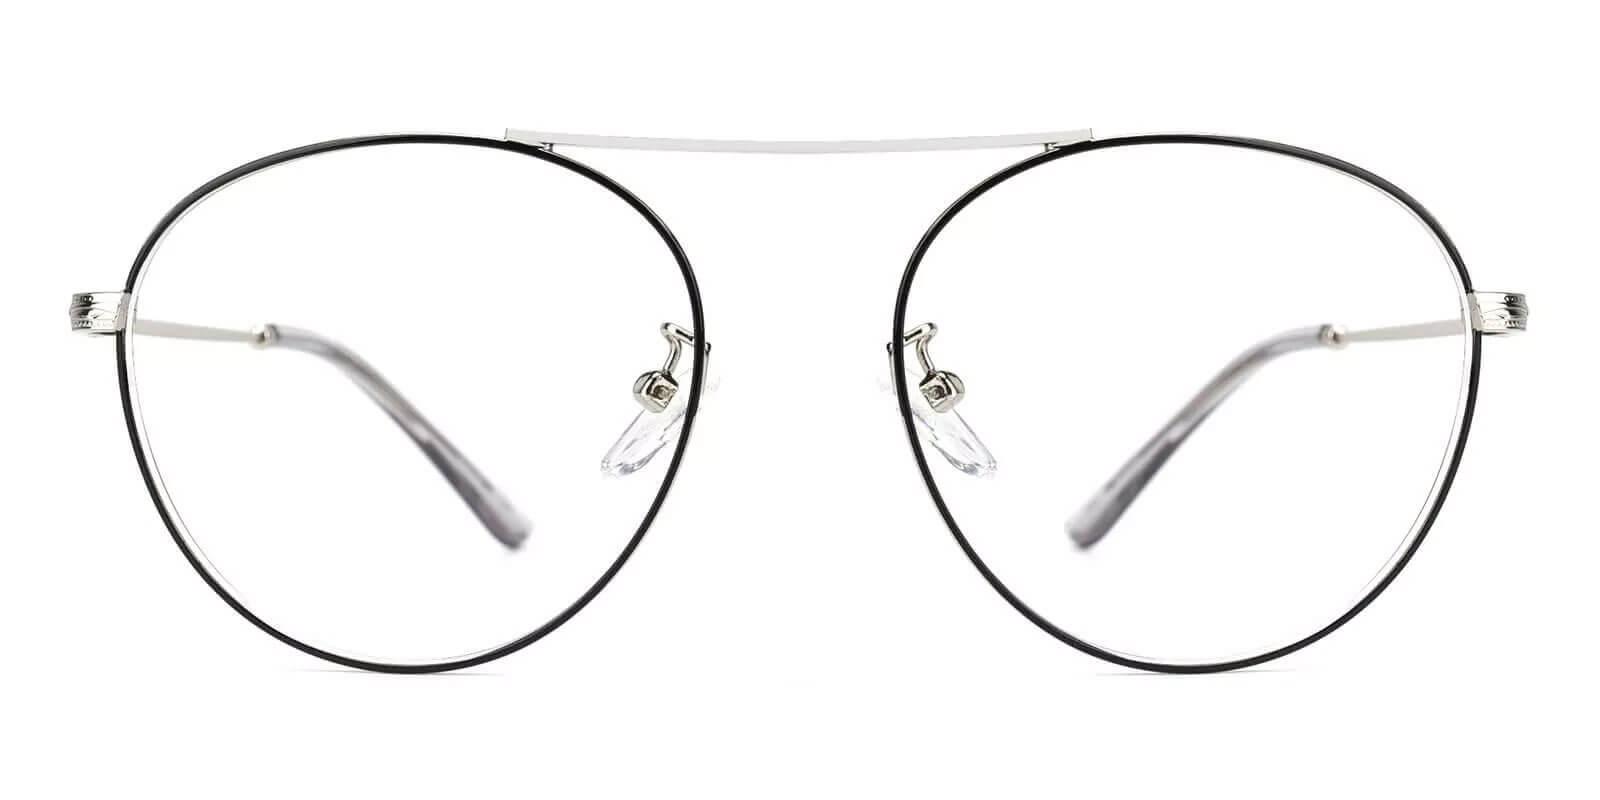 Chloe Silver Metal Eyeglasses , NosePads Frames from ABBE Glasses